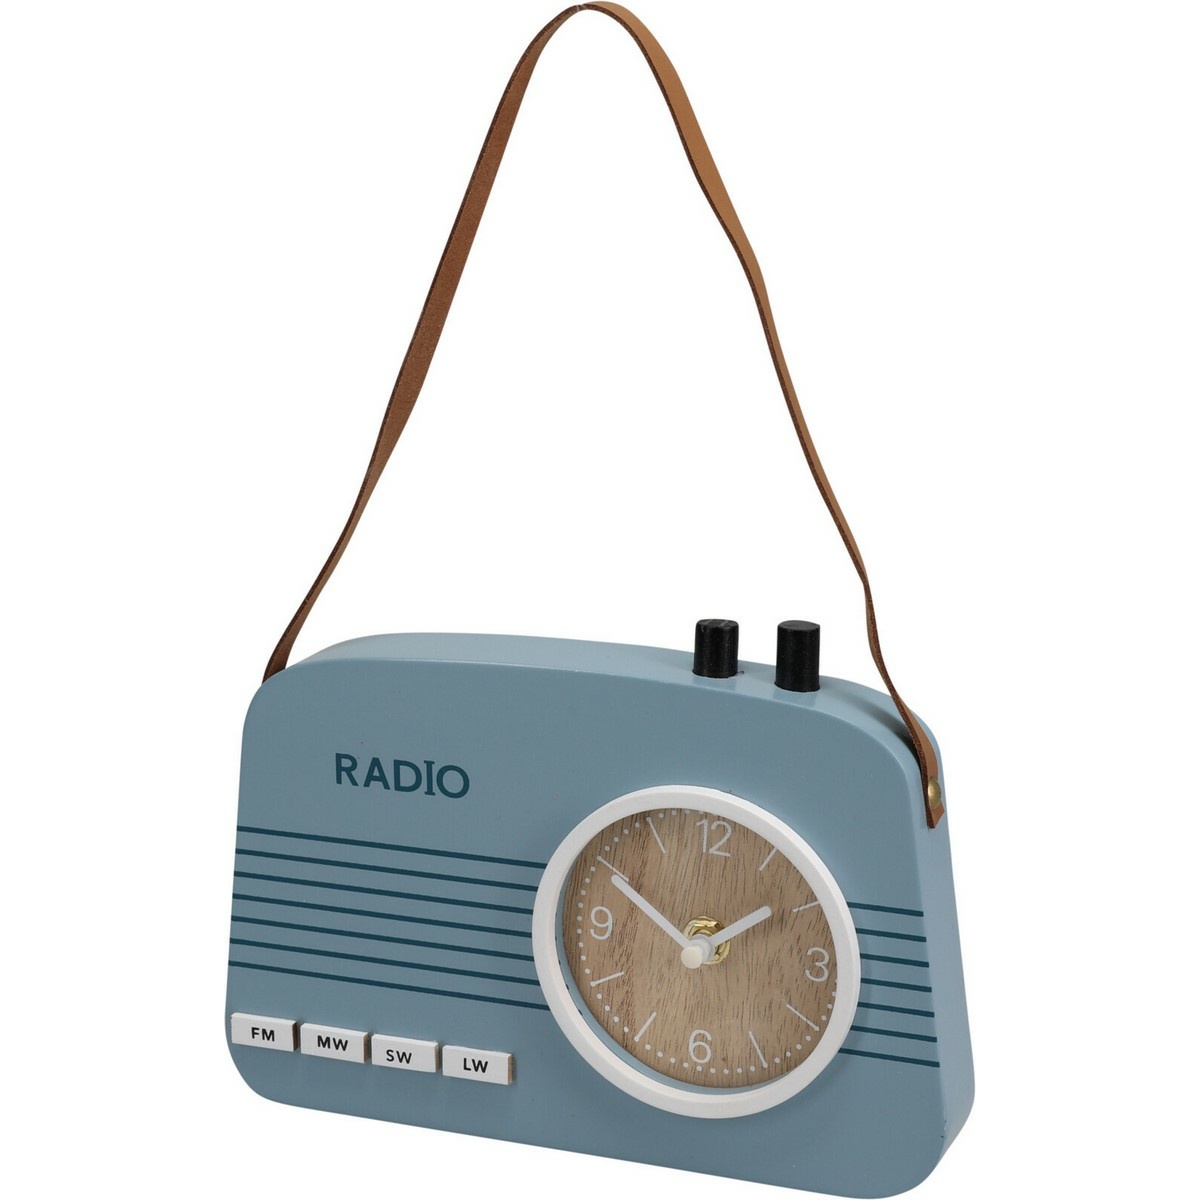 Poza Ceas de masa Old radio albastru, 21,5 x3,5 x 15,5 cm